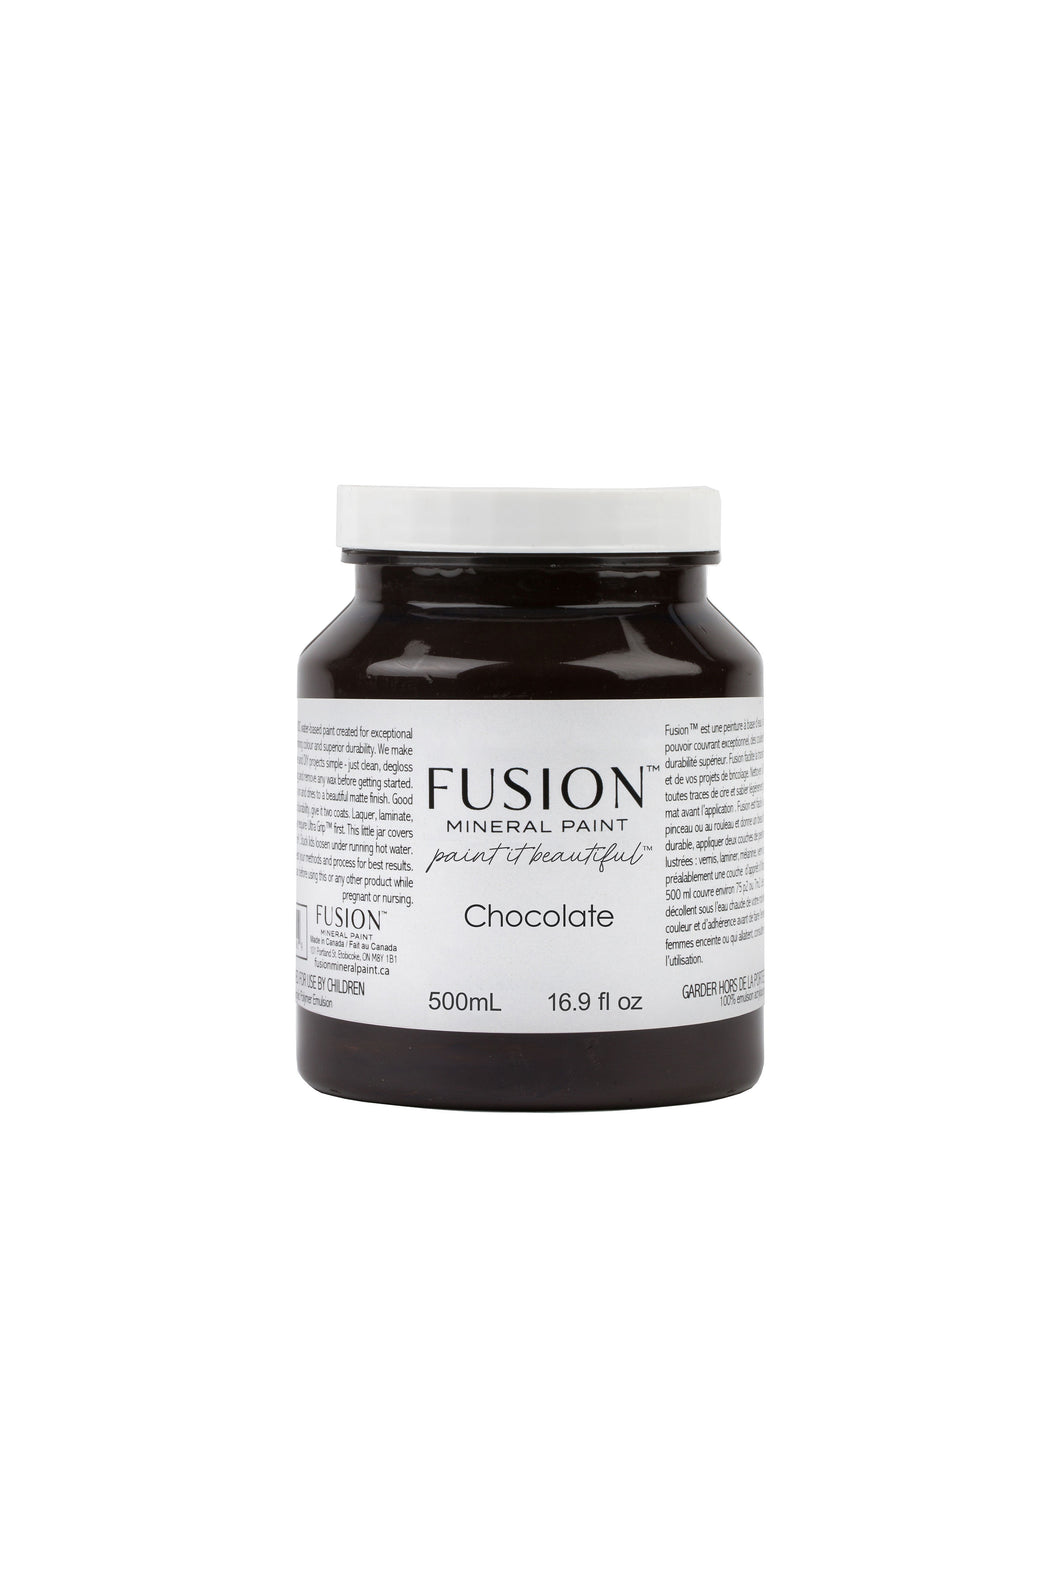 Fusion Mineral Paint - Chocolate 500 ml Jar